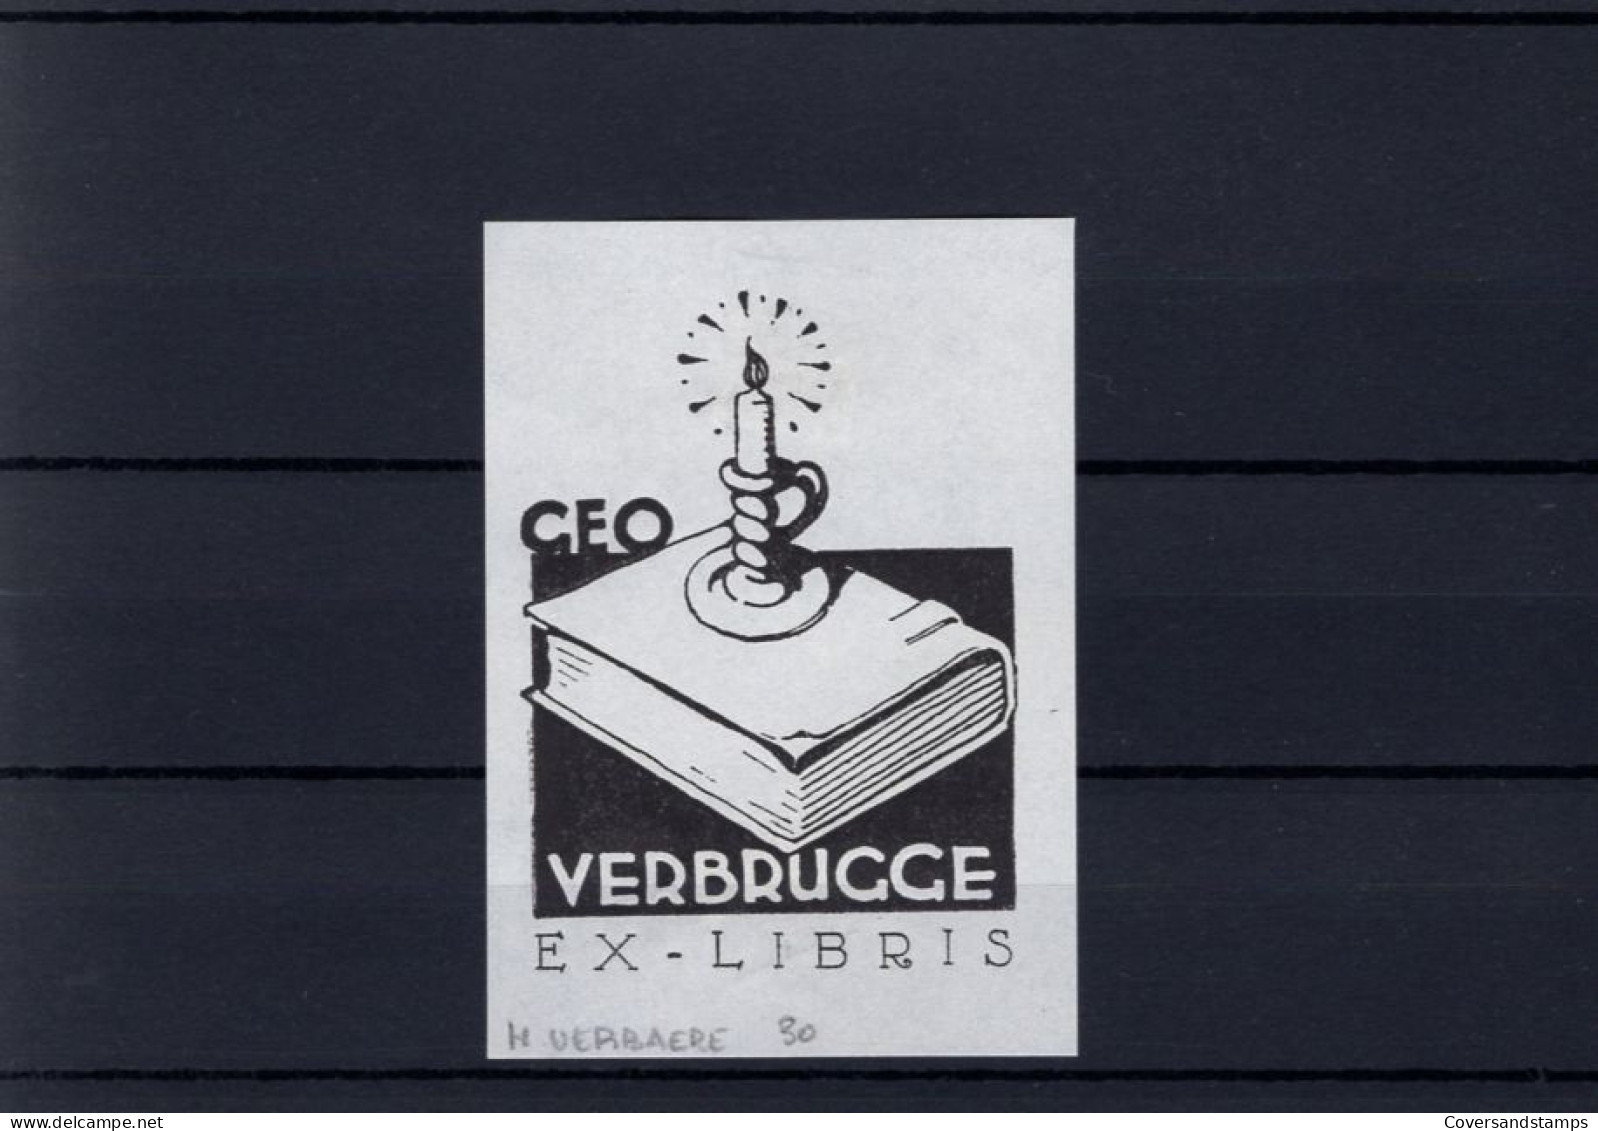 Ex-Libris : H. Verbaere - Geo Verbrugge - Exlibris